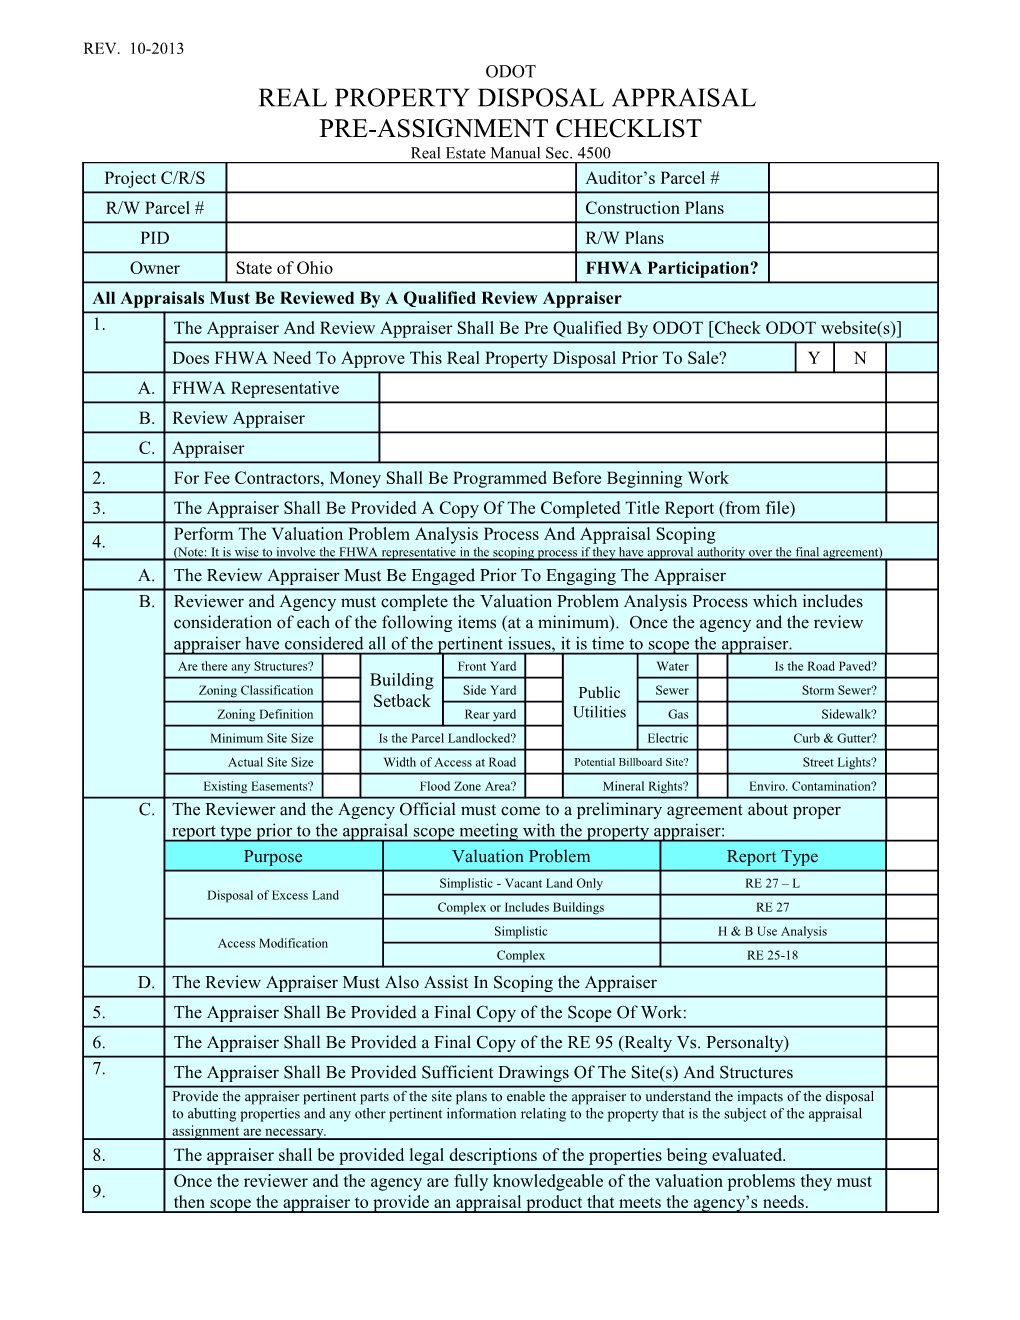 Disposal Appraisal Preassignment Checklist